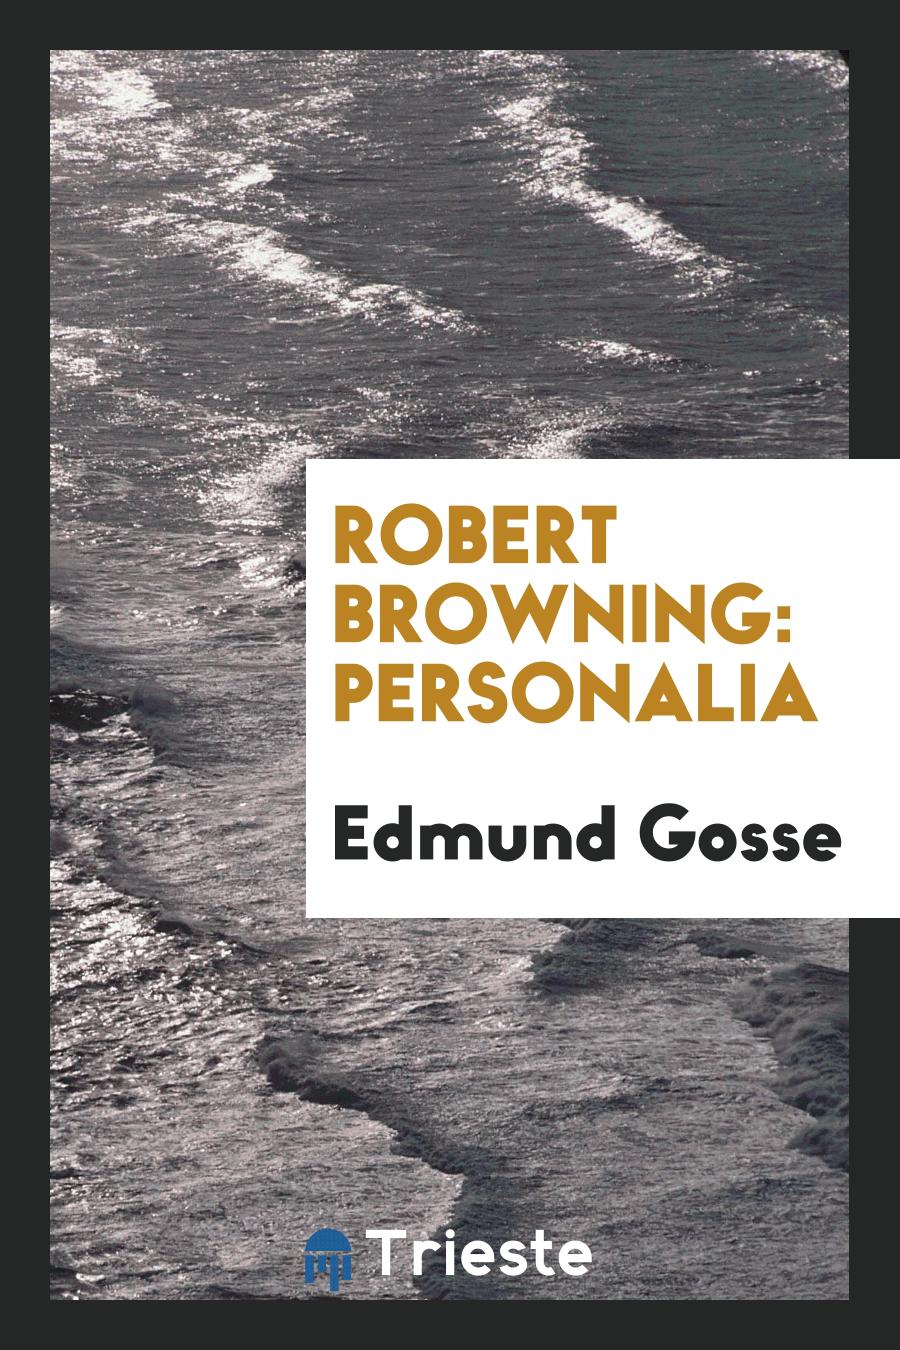 Robert Browning: Personalia